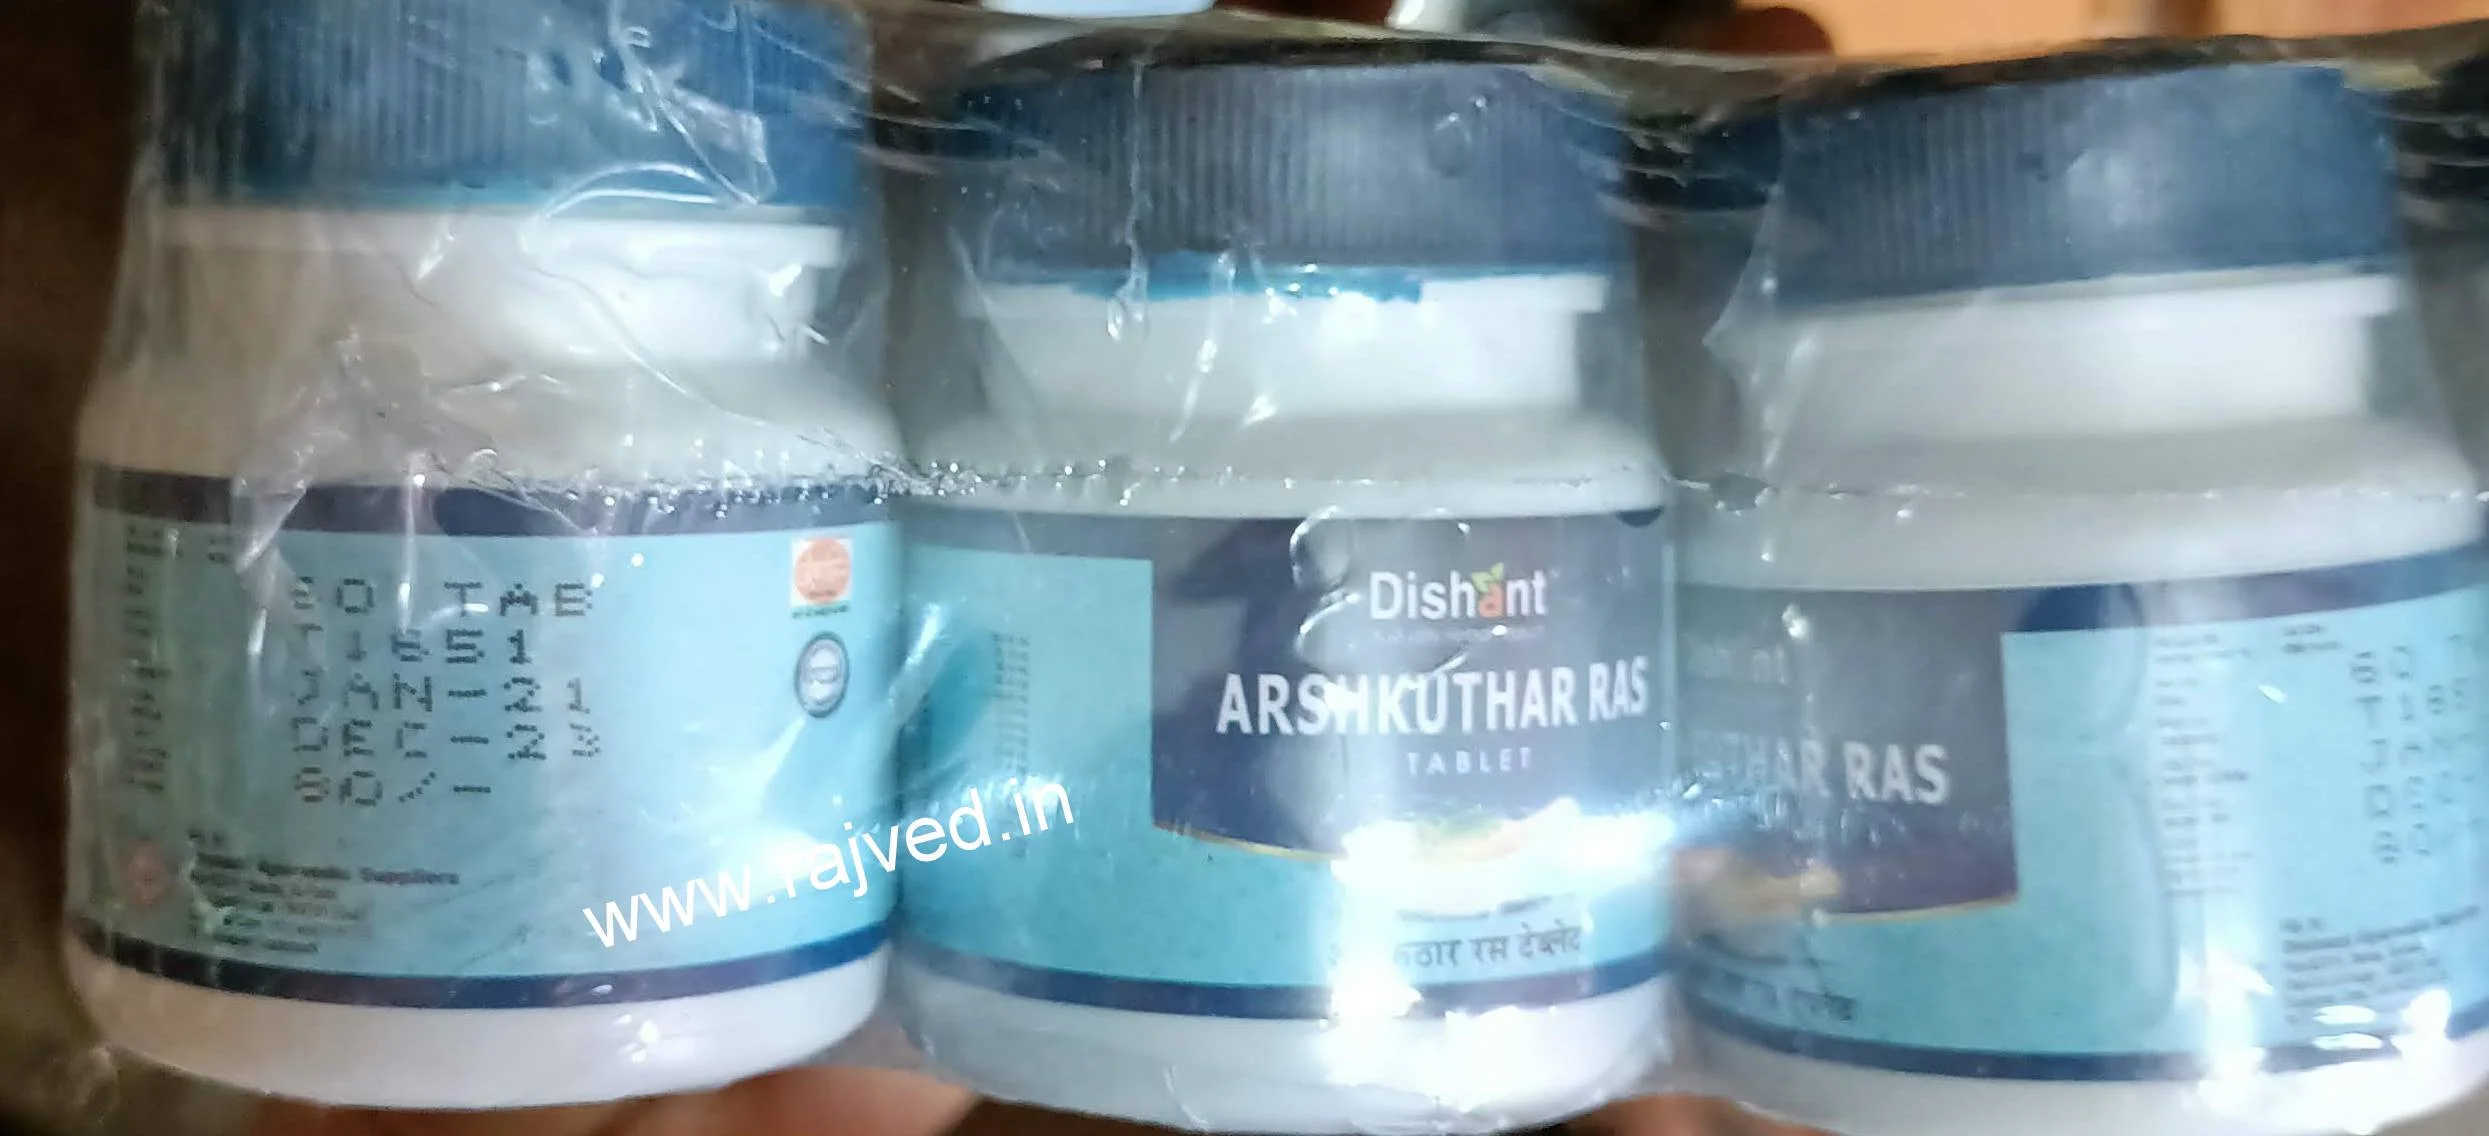 arshkuthar ras tablets 250 gm upto 20% off dishant ayurvedic suppliers